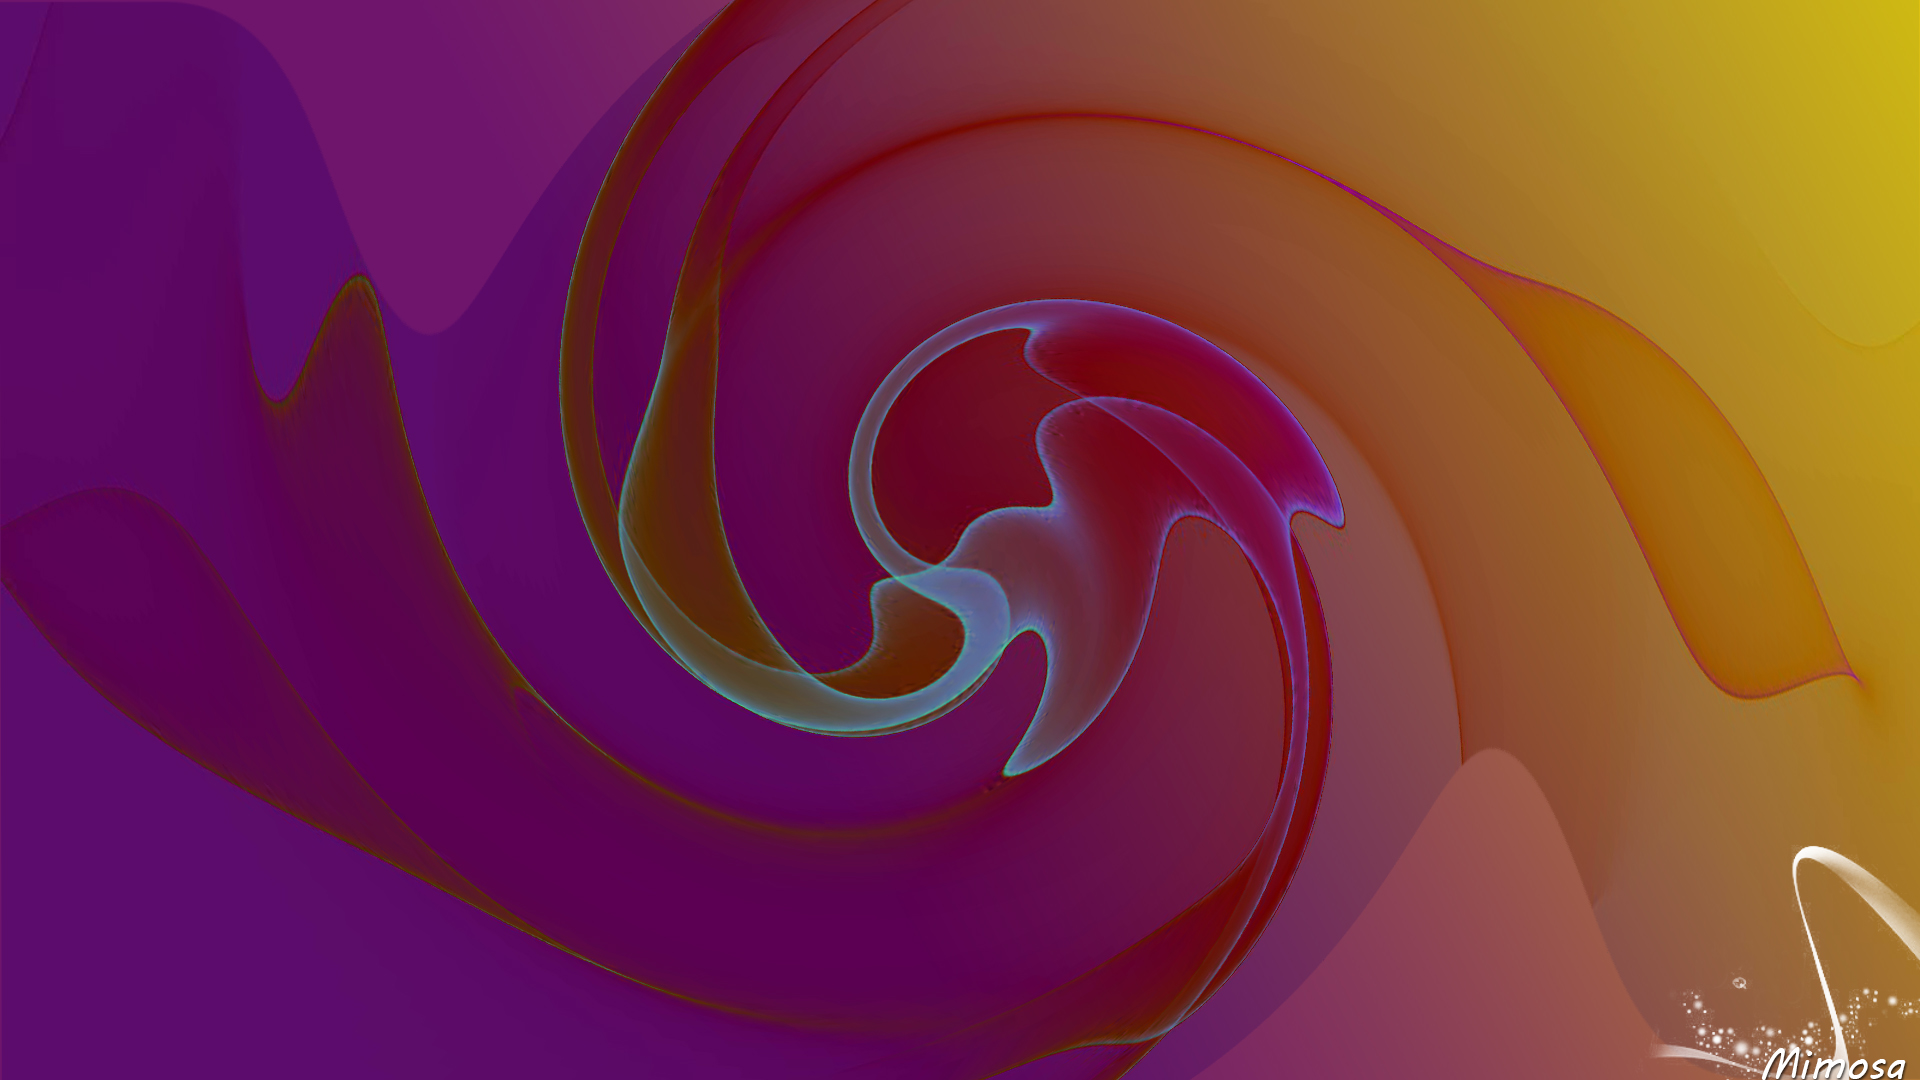 Artistic Colors Digital Art Gradient Swirl 1920x1080